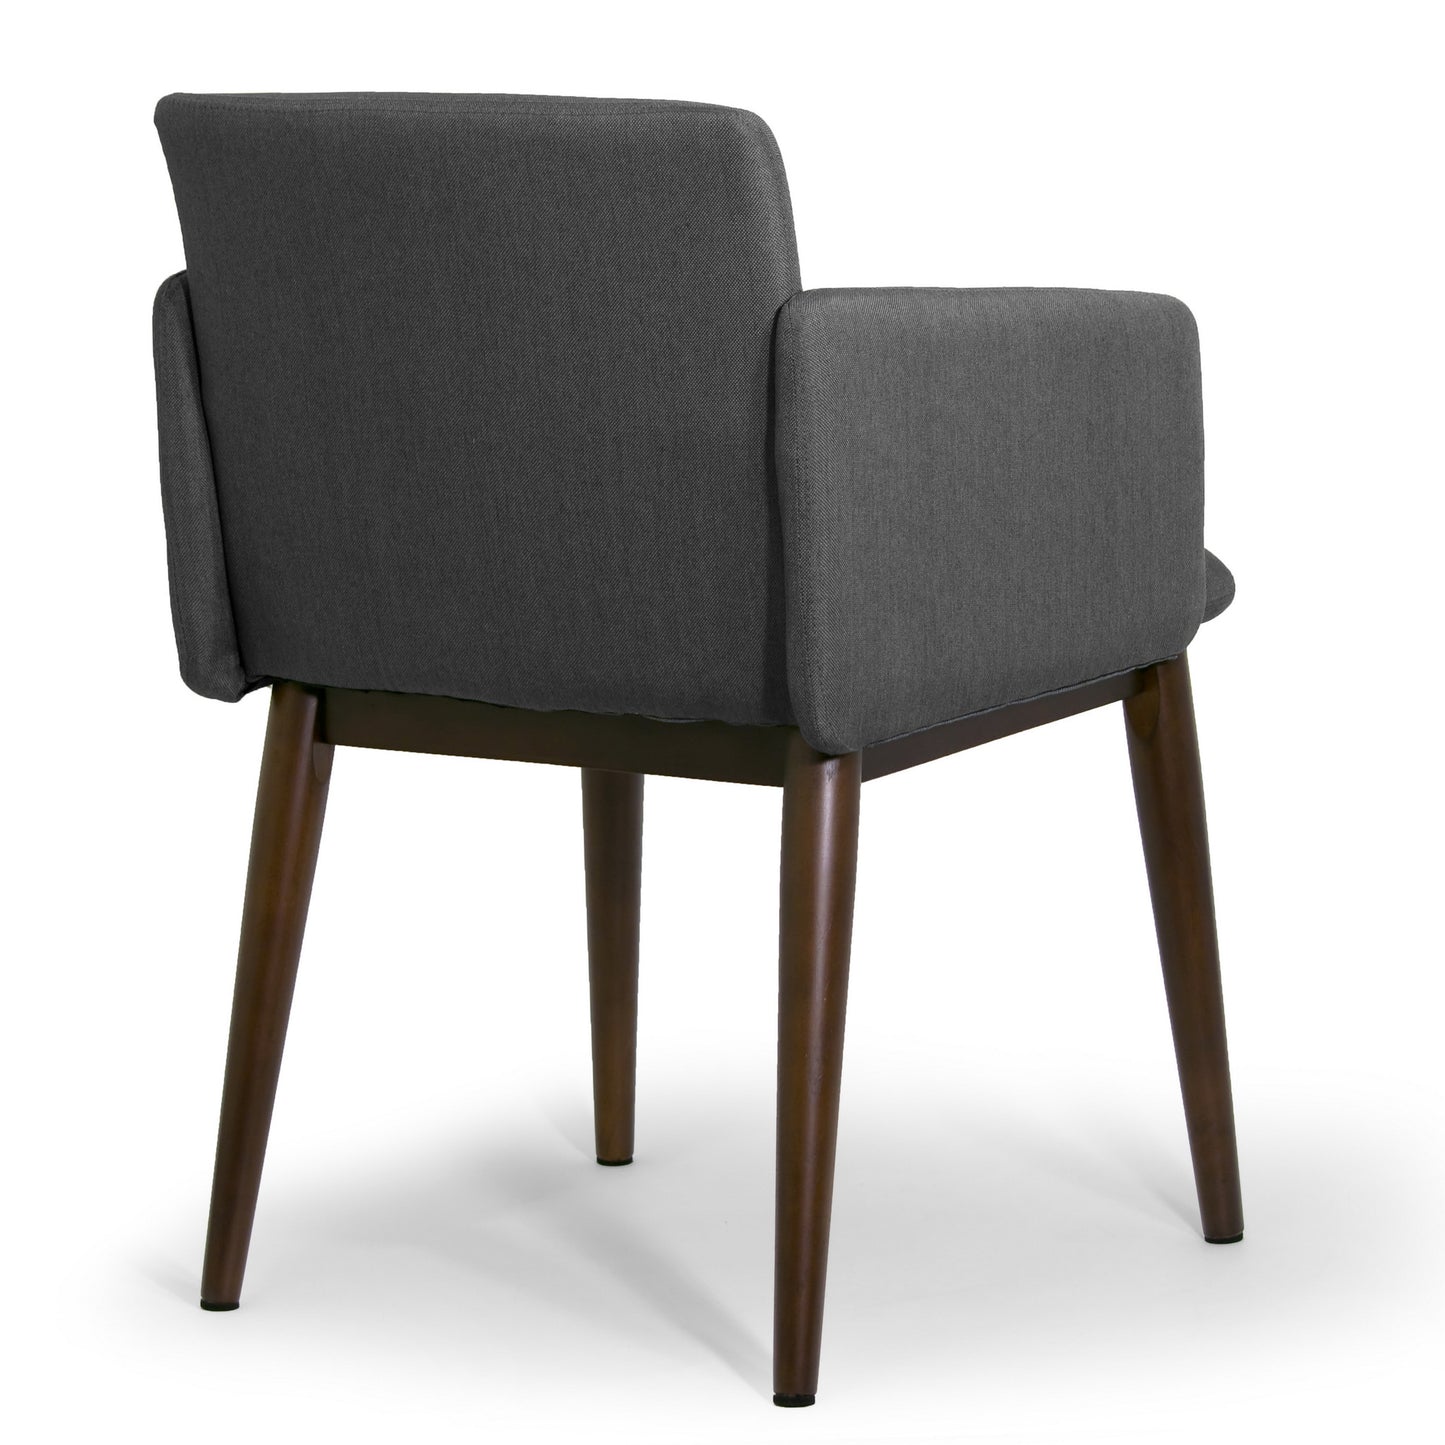 Set of 2 Aila Dark Grey Fabric Accent Chair Arm Chair with Dark Brown Beech Legs